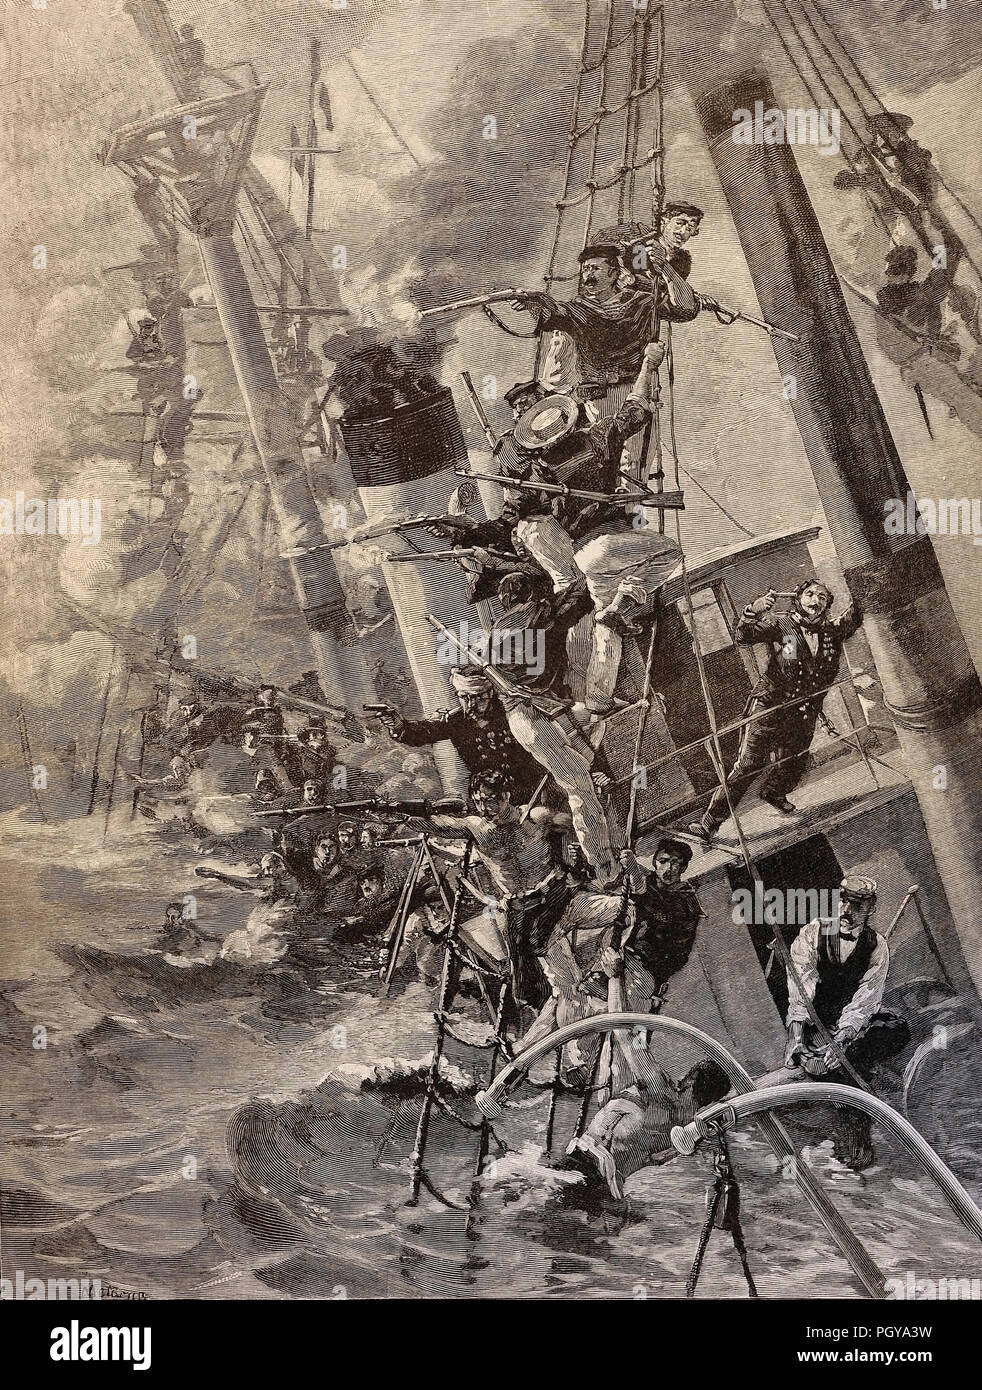 Schlacht von Lissa (heute die Insel Vis - Kroatien) vom 20. Juli 1866 - Xilografia di Edoardo Matania Treves Editori 1889 Stockfoto